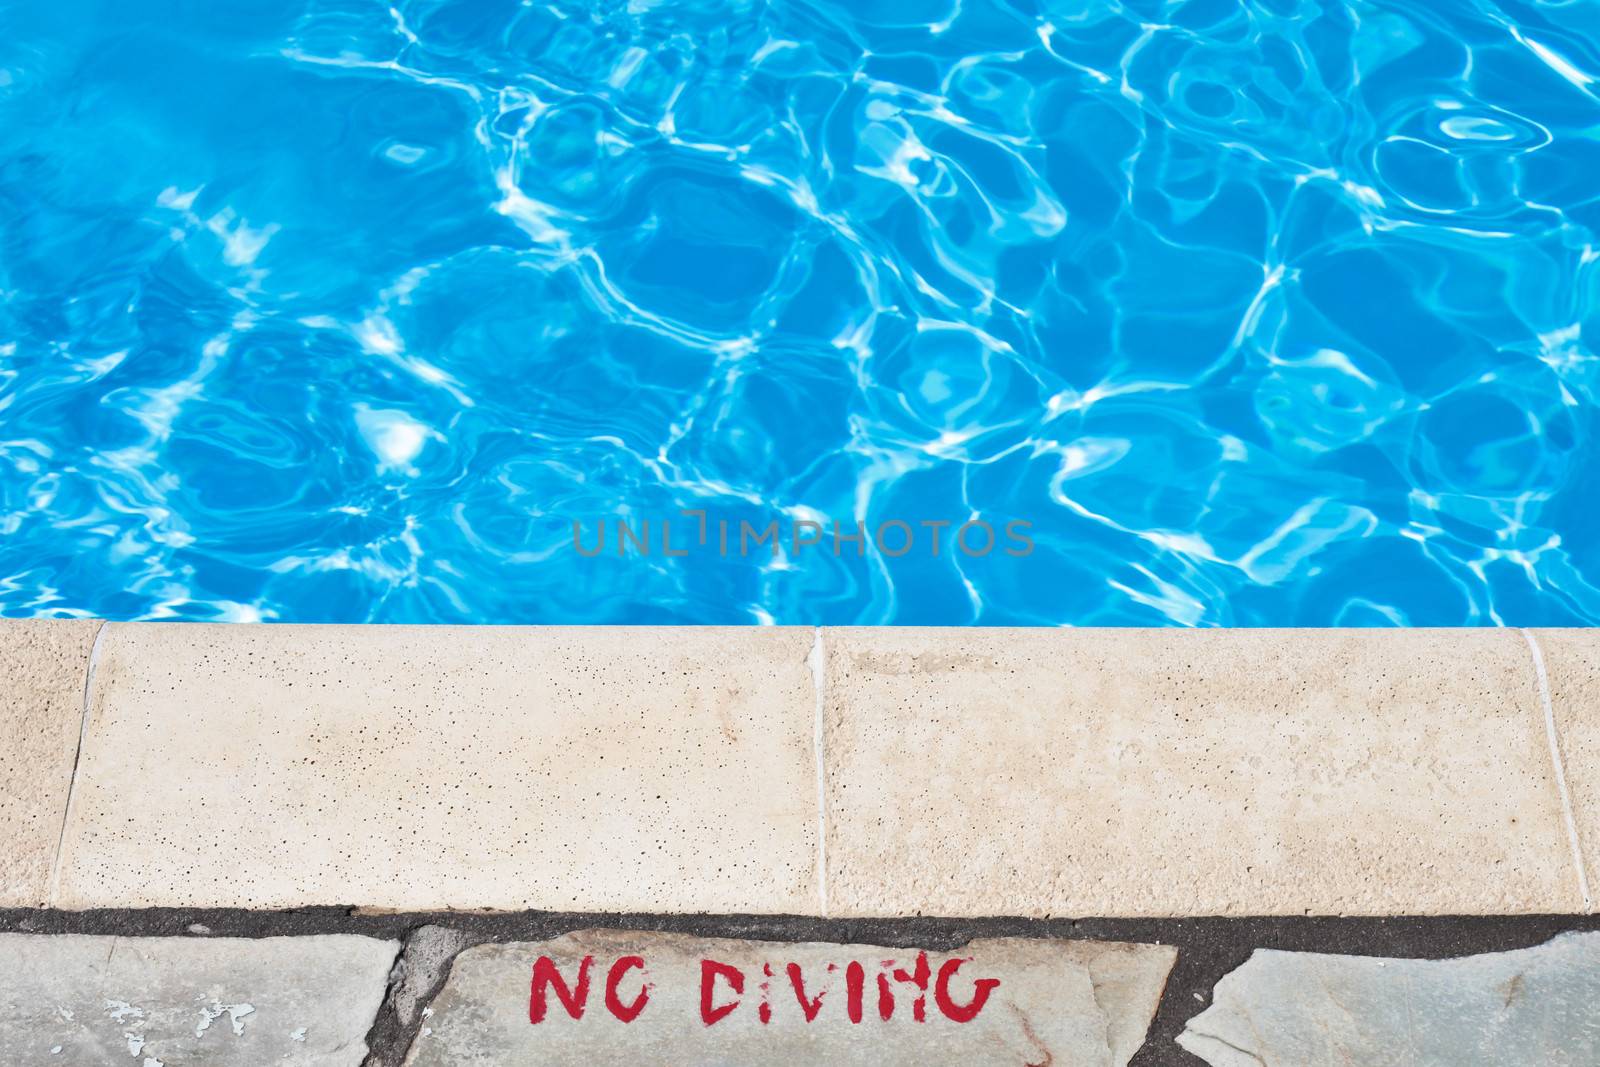 No diving warning at the edge of a swimming pool